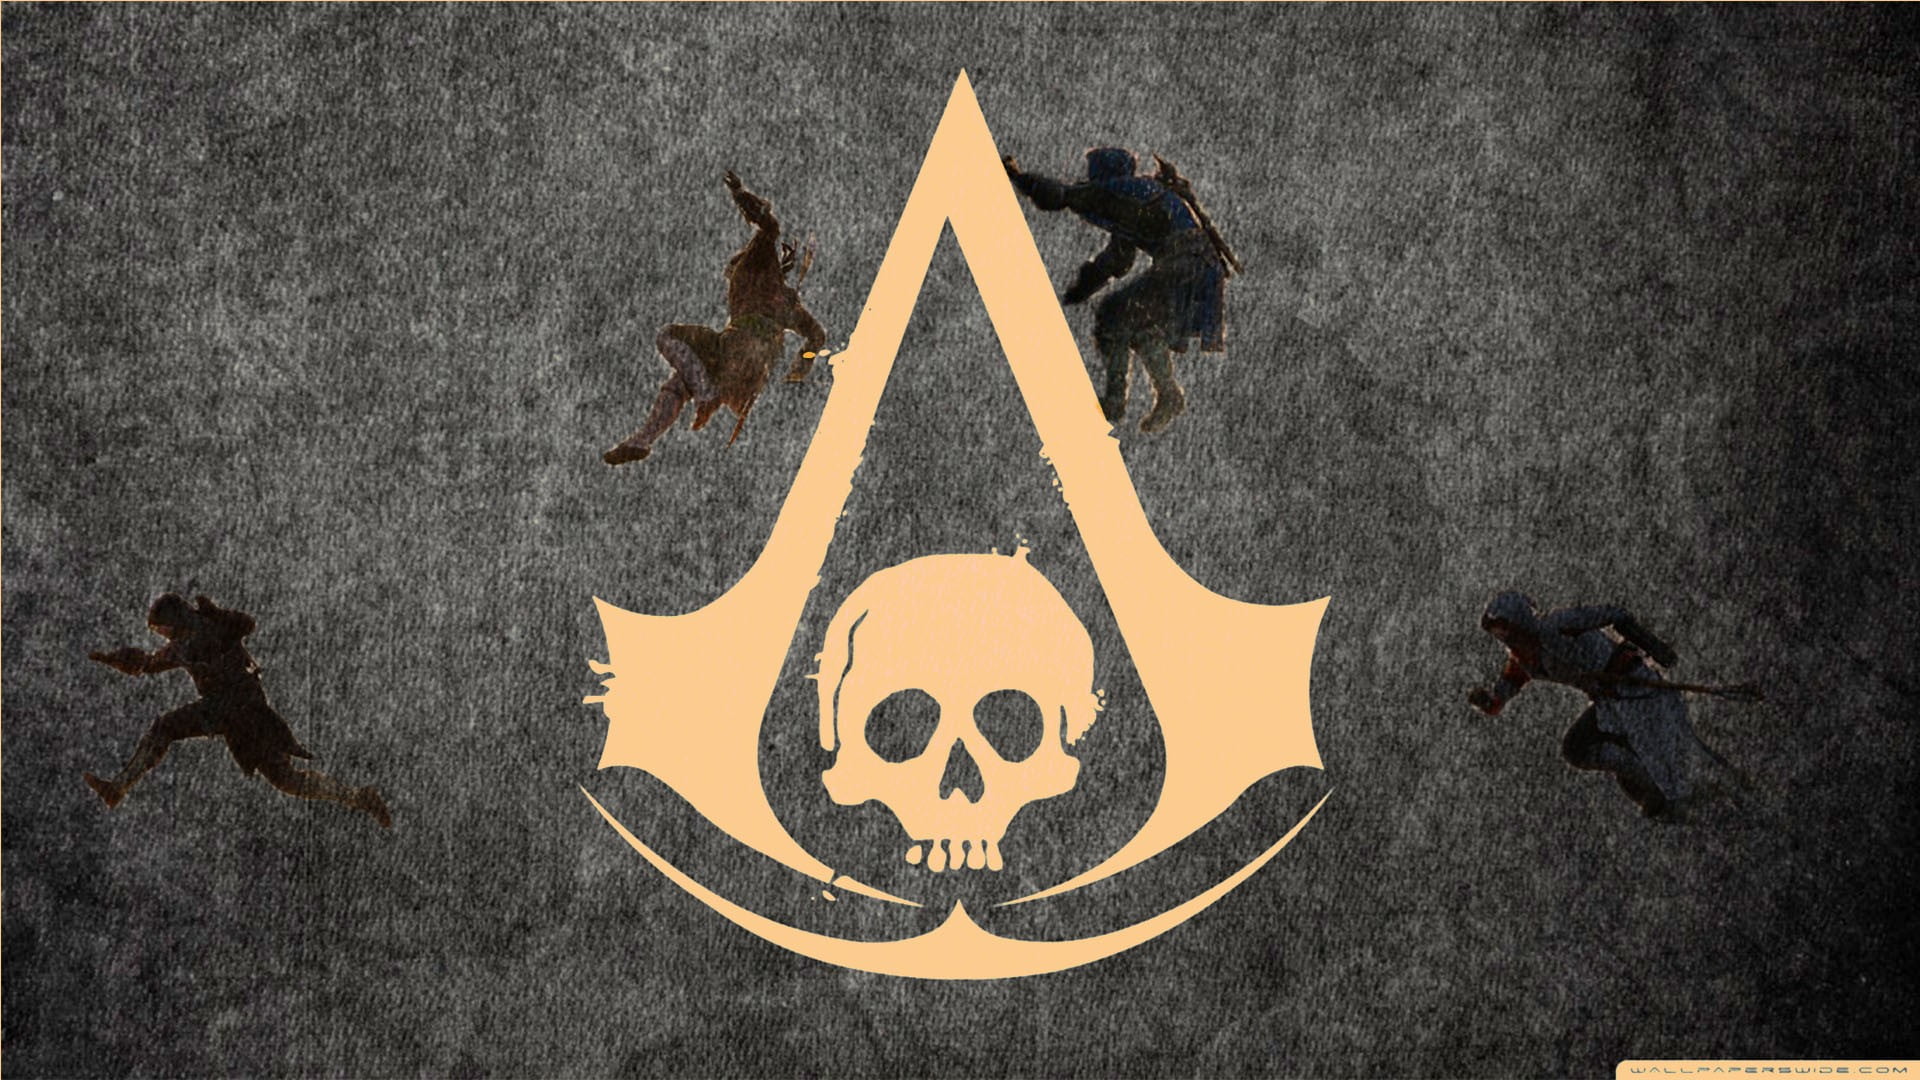 Assassin's Creed logo, Assassin's Creed, video games, climbing